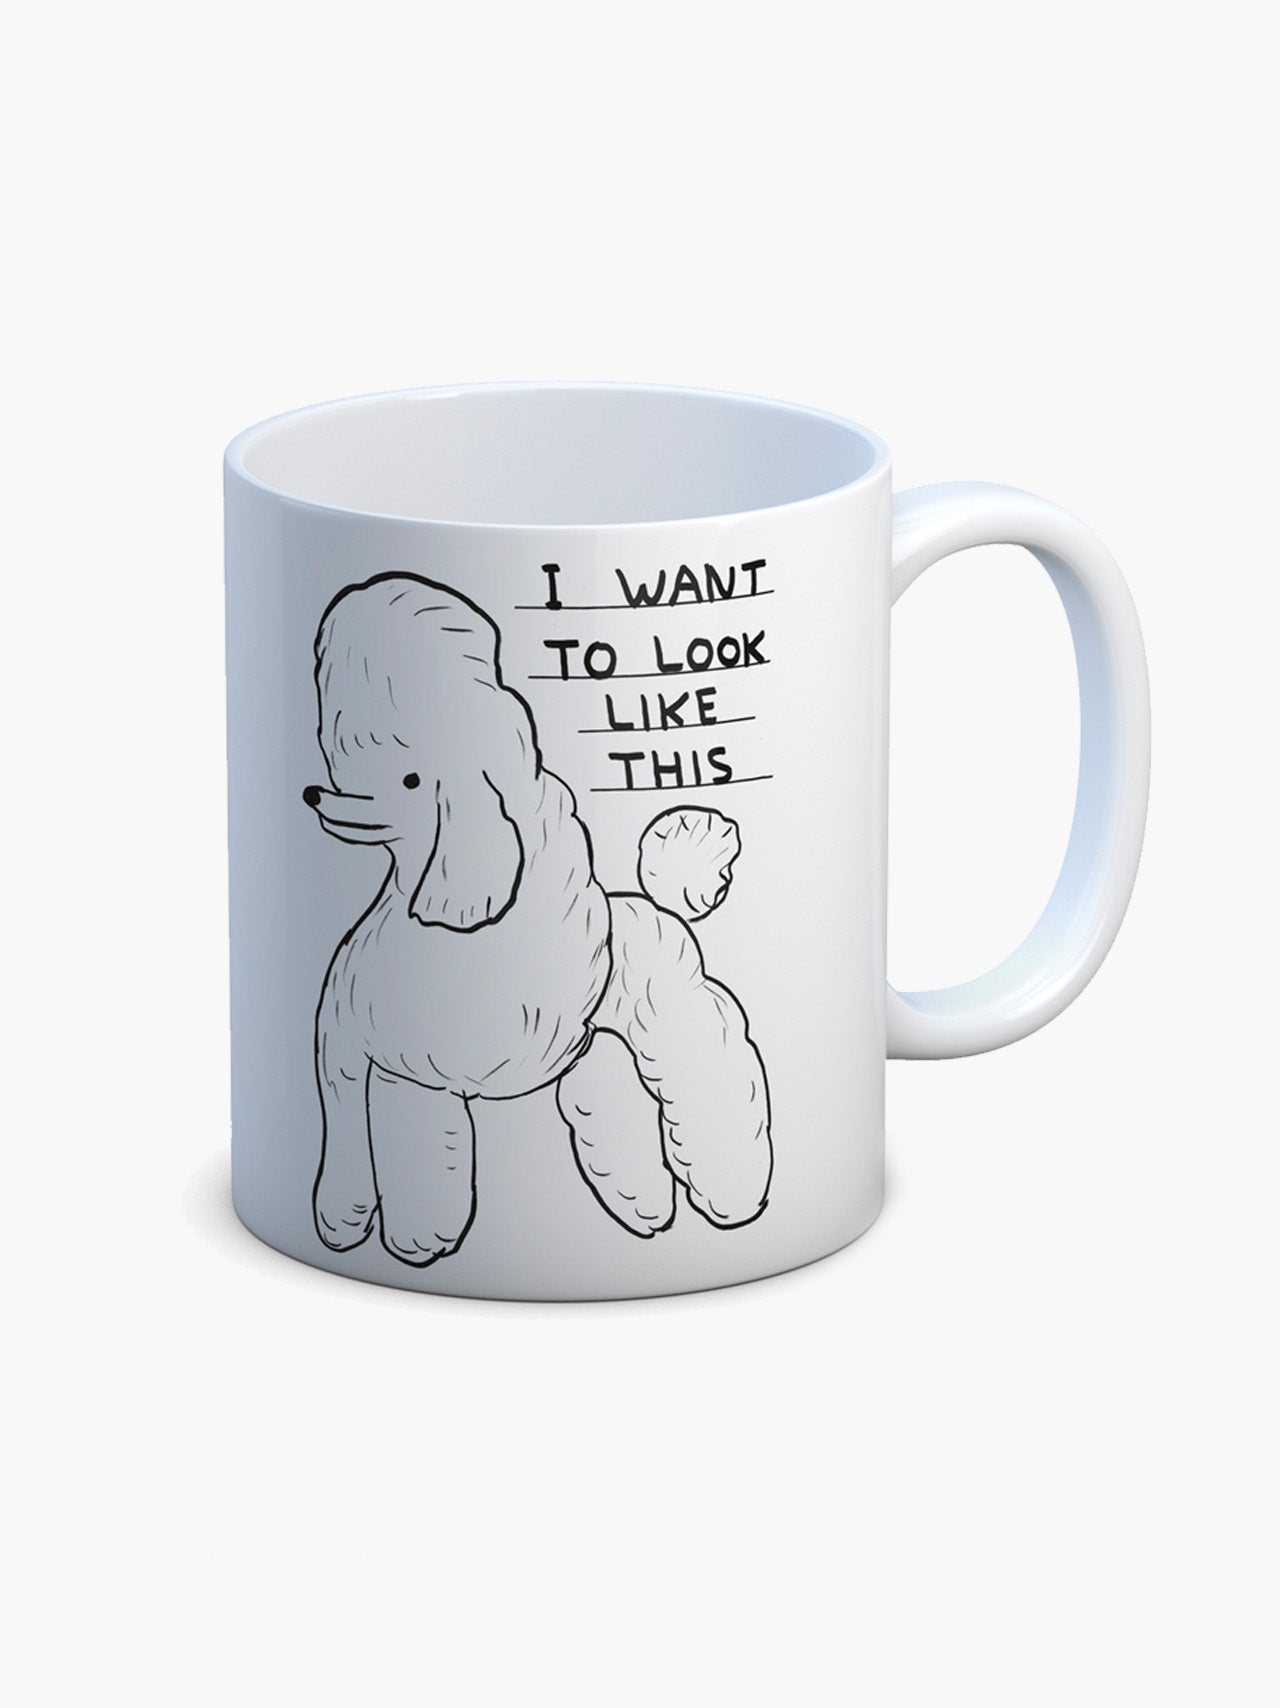 Want To Look Like This Mug x David Shrigley (Poodle)